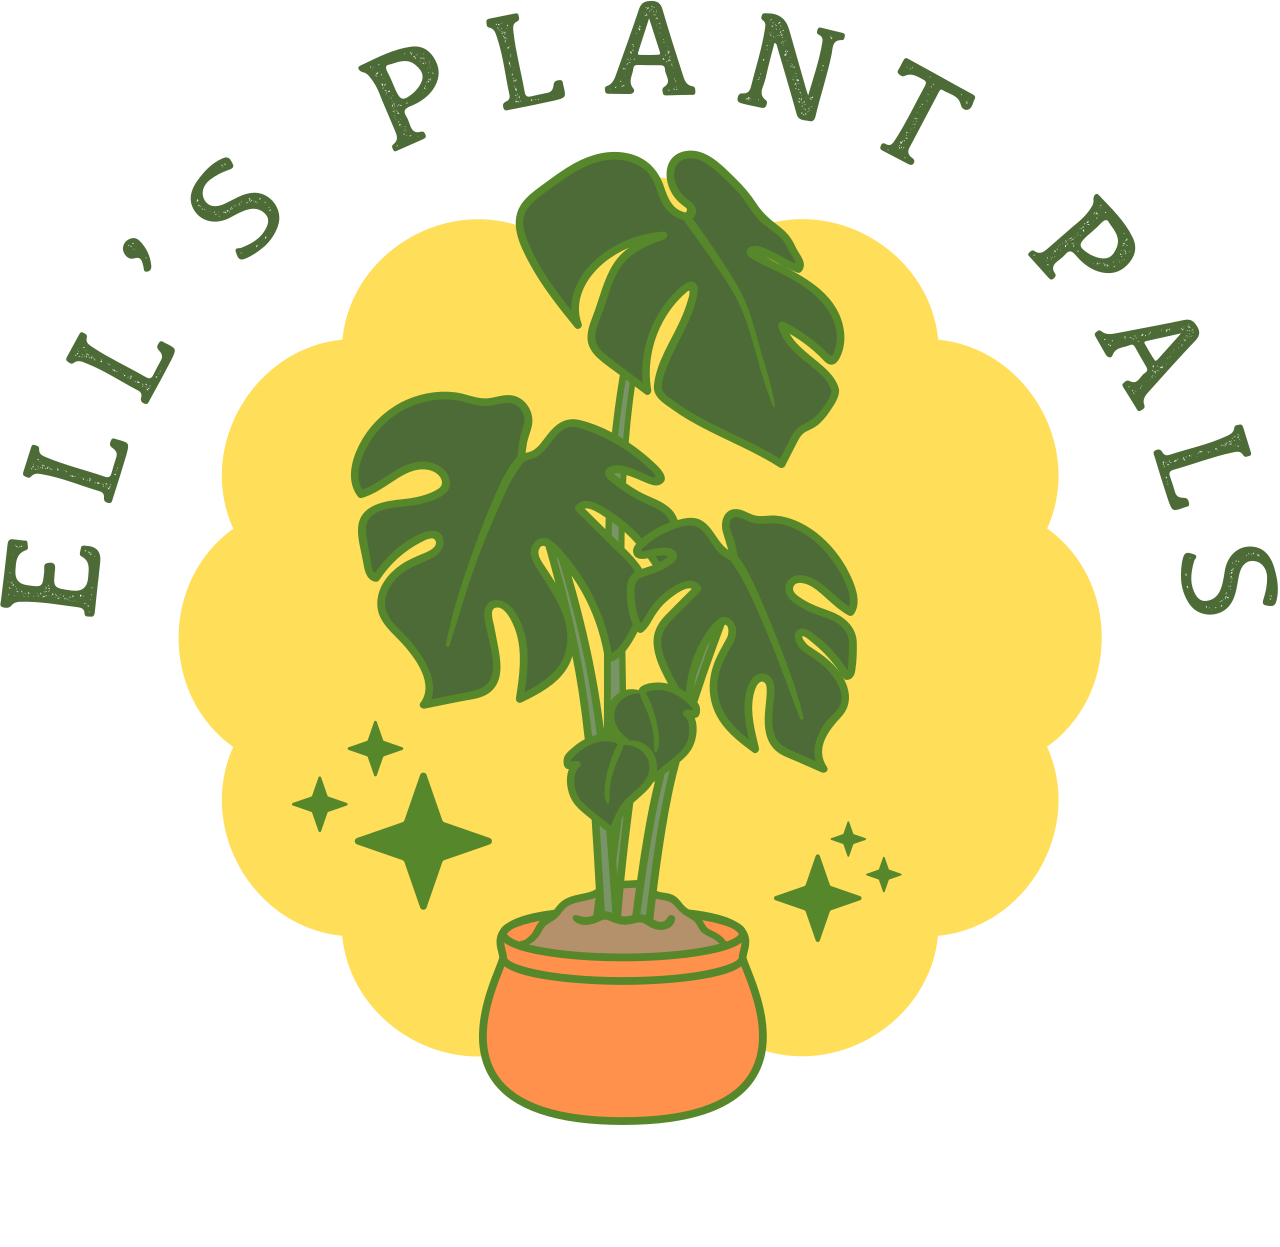 Ell’s Plant Pals's logo